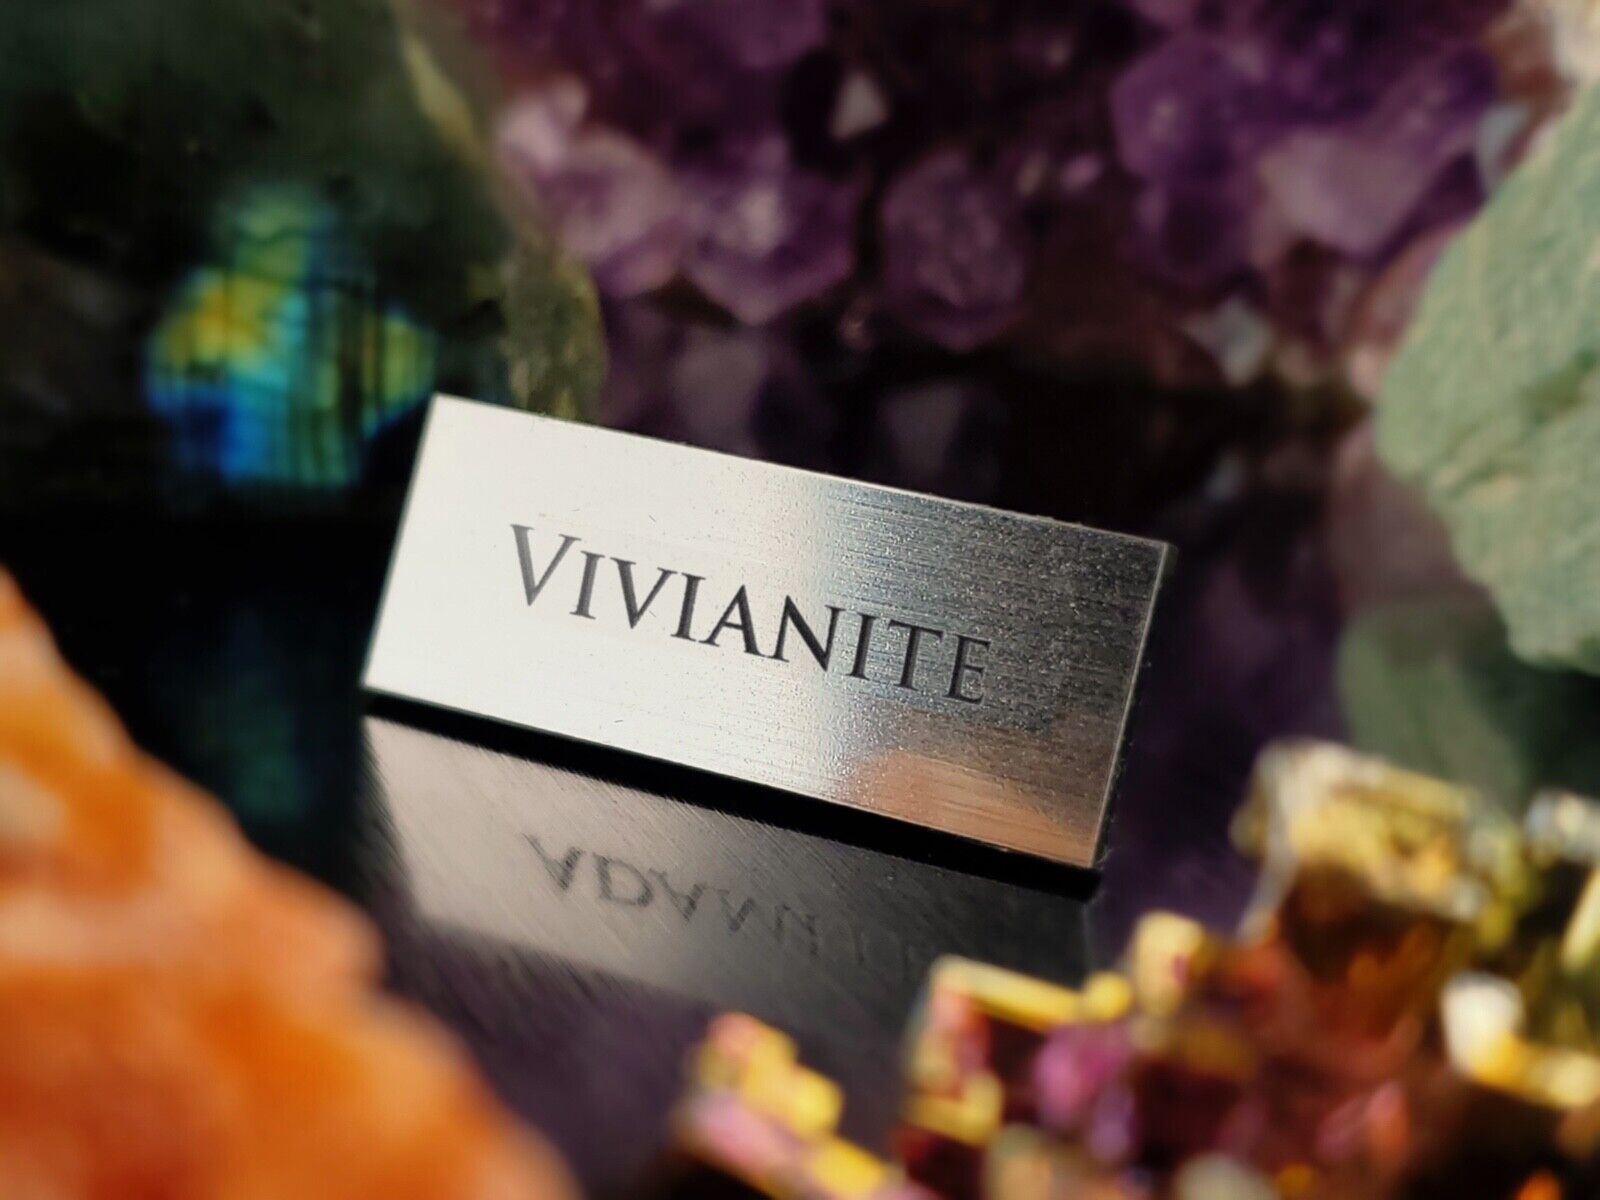 VIVIANITE GEM DISPLAY NAME PLATE - EXHIBIT ARTIFACT LABEL-MUSEUM QUALITY